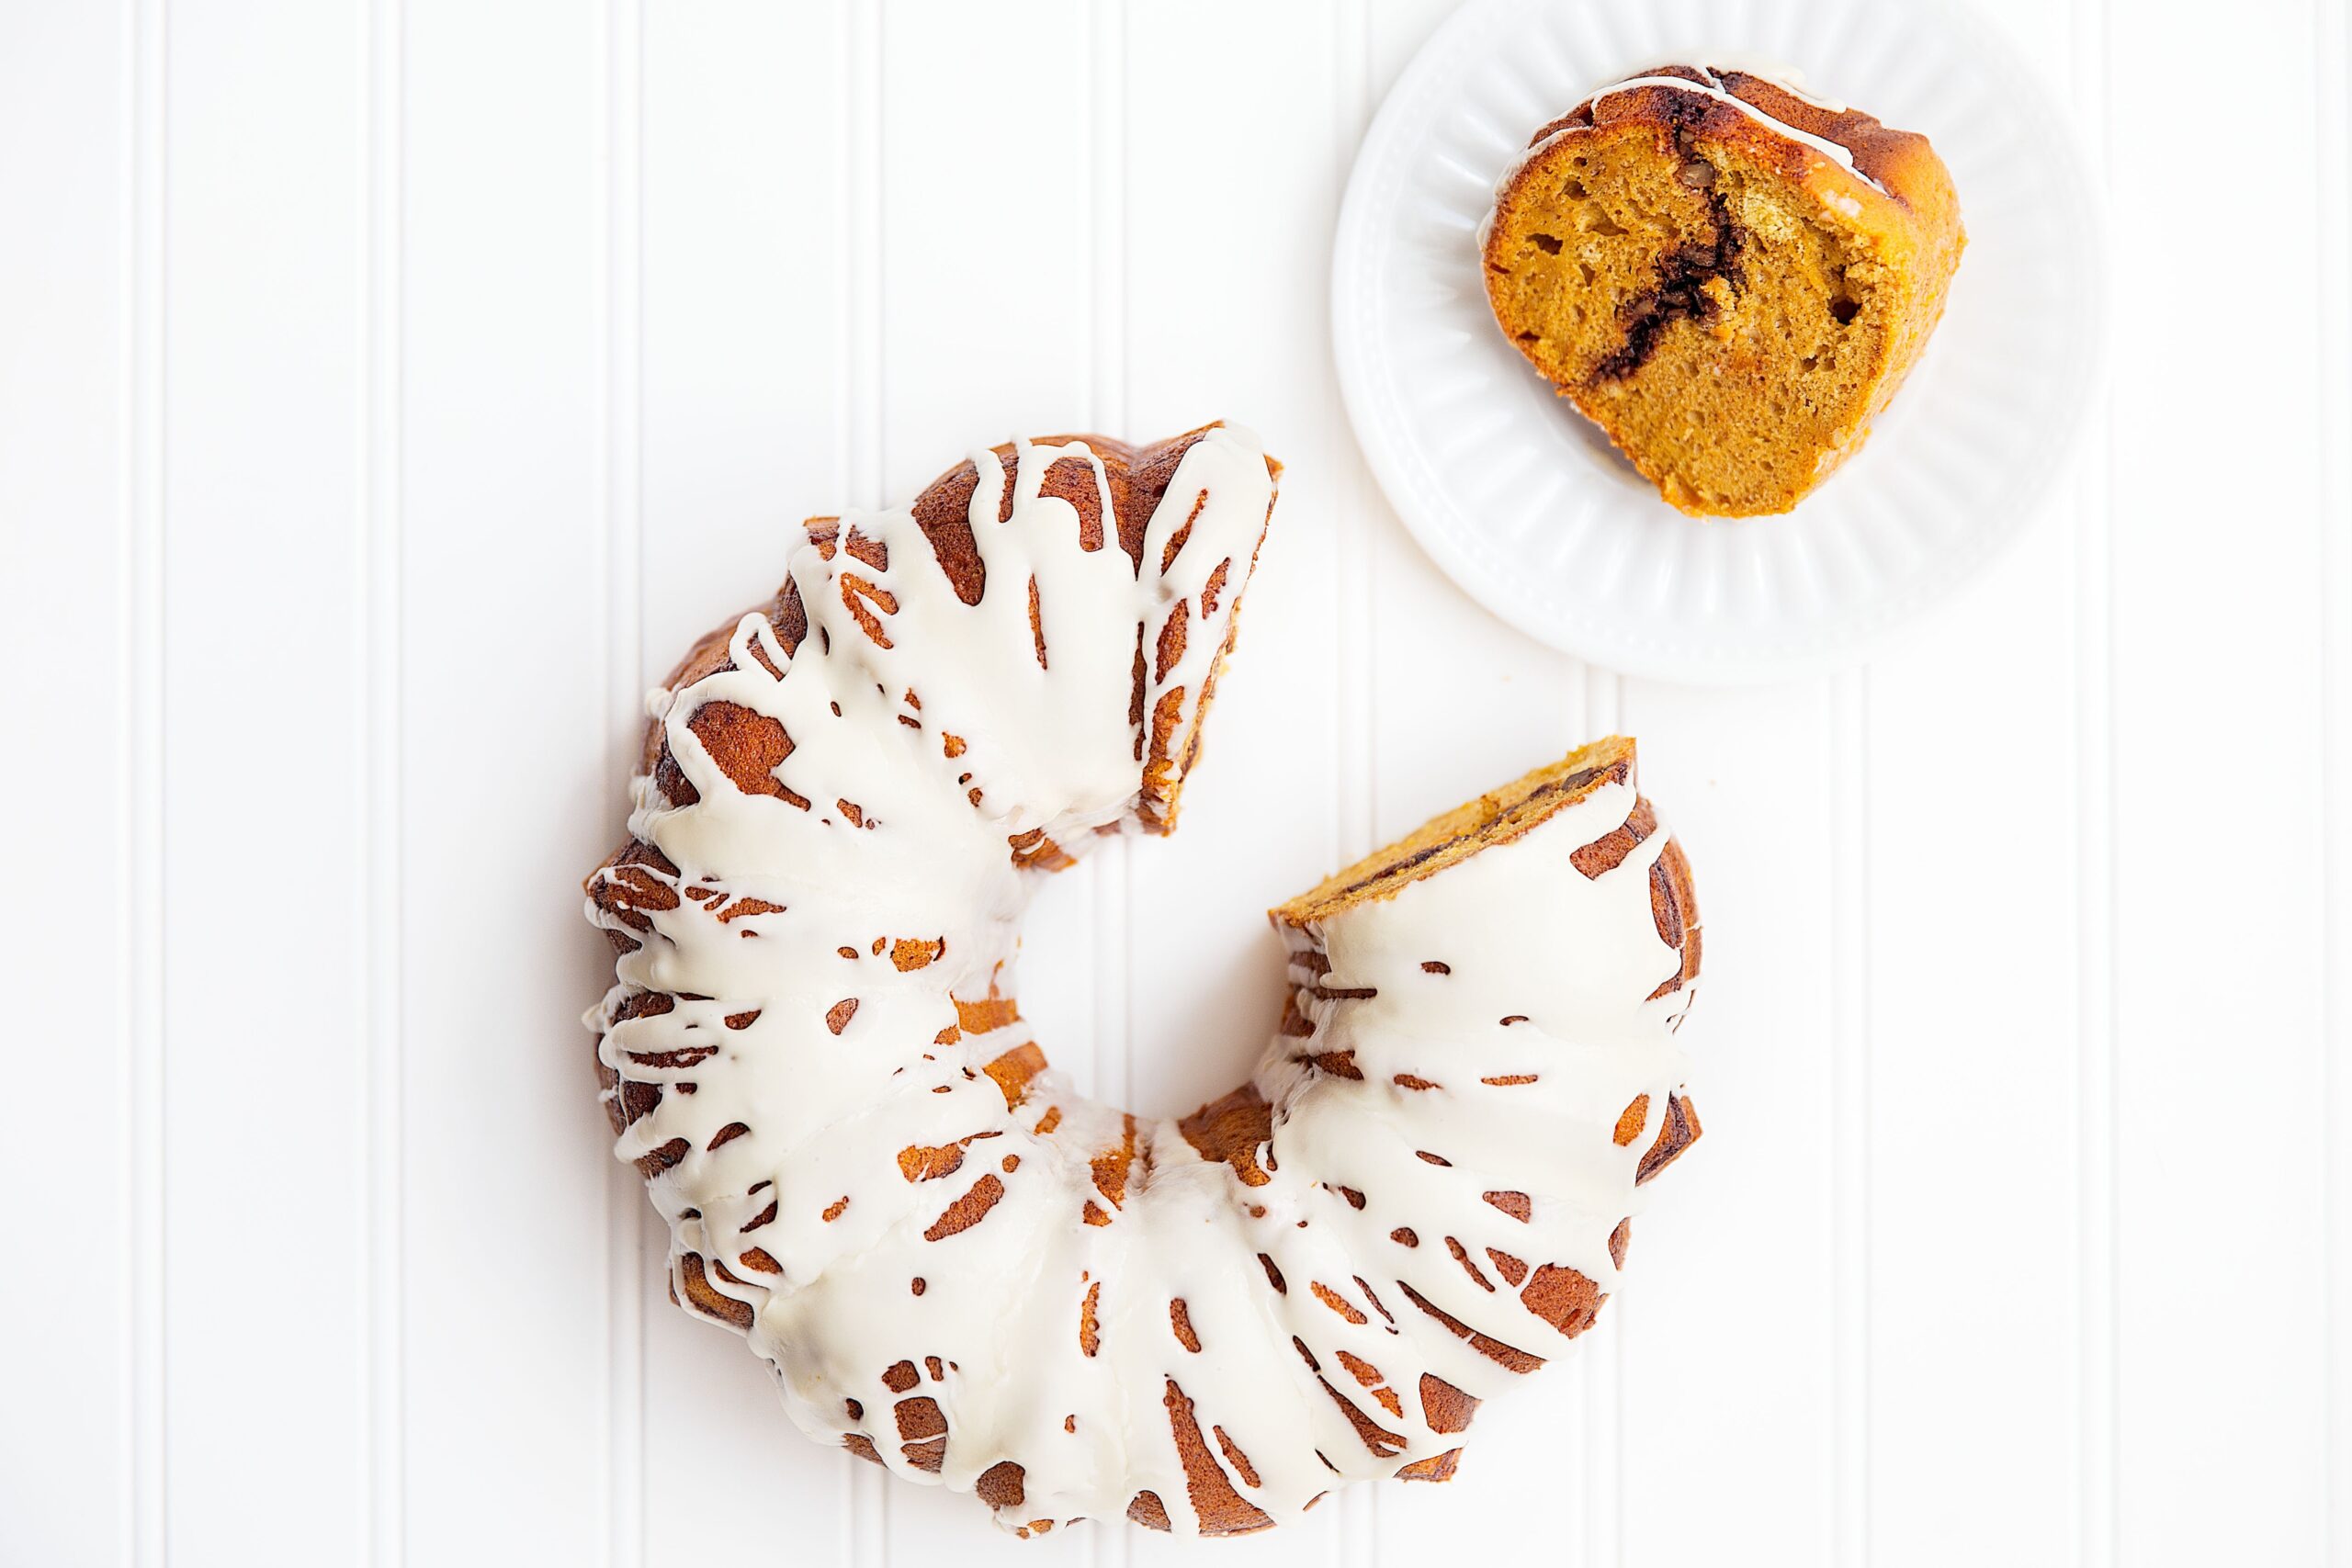 A spiced sweet potato bundt cake with pecan streusel and topped with a maple syrup glaze | via Broma Bakery | #sweetpotato #bundtcake